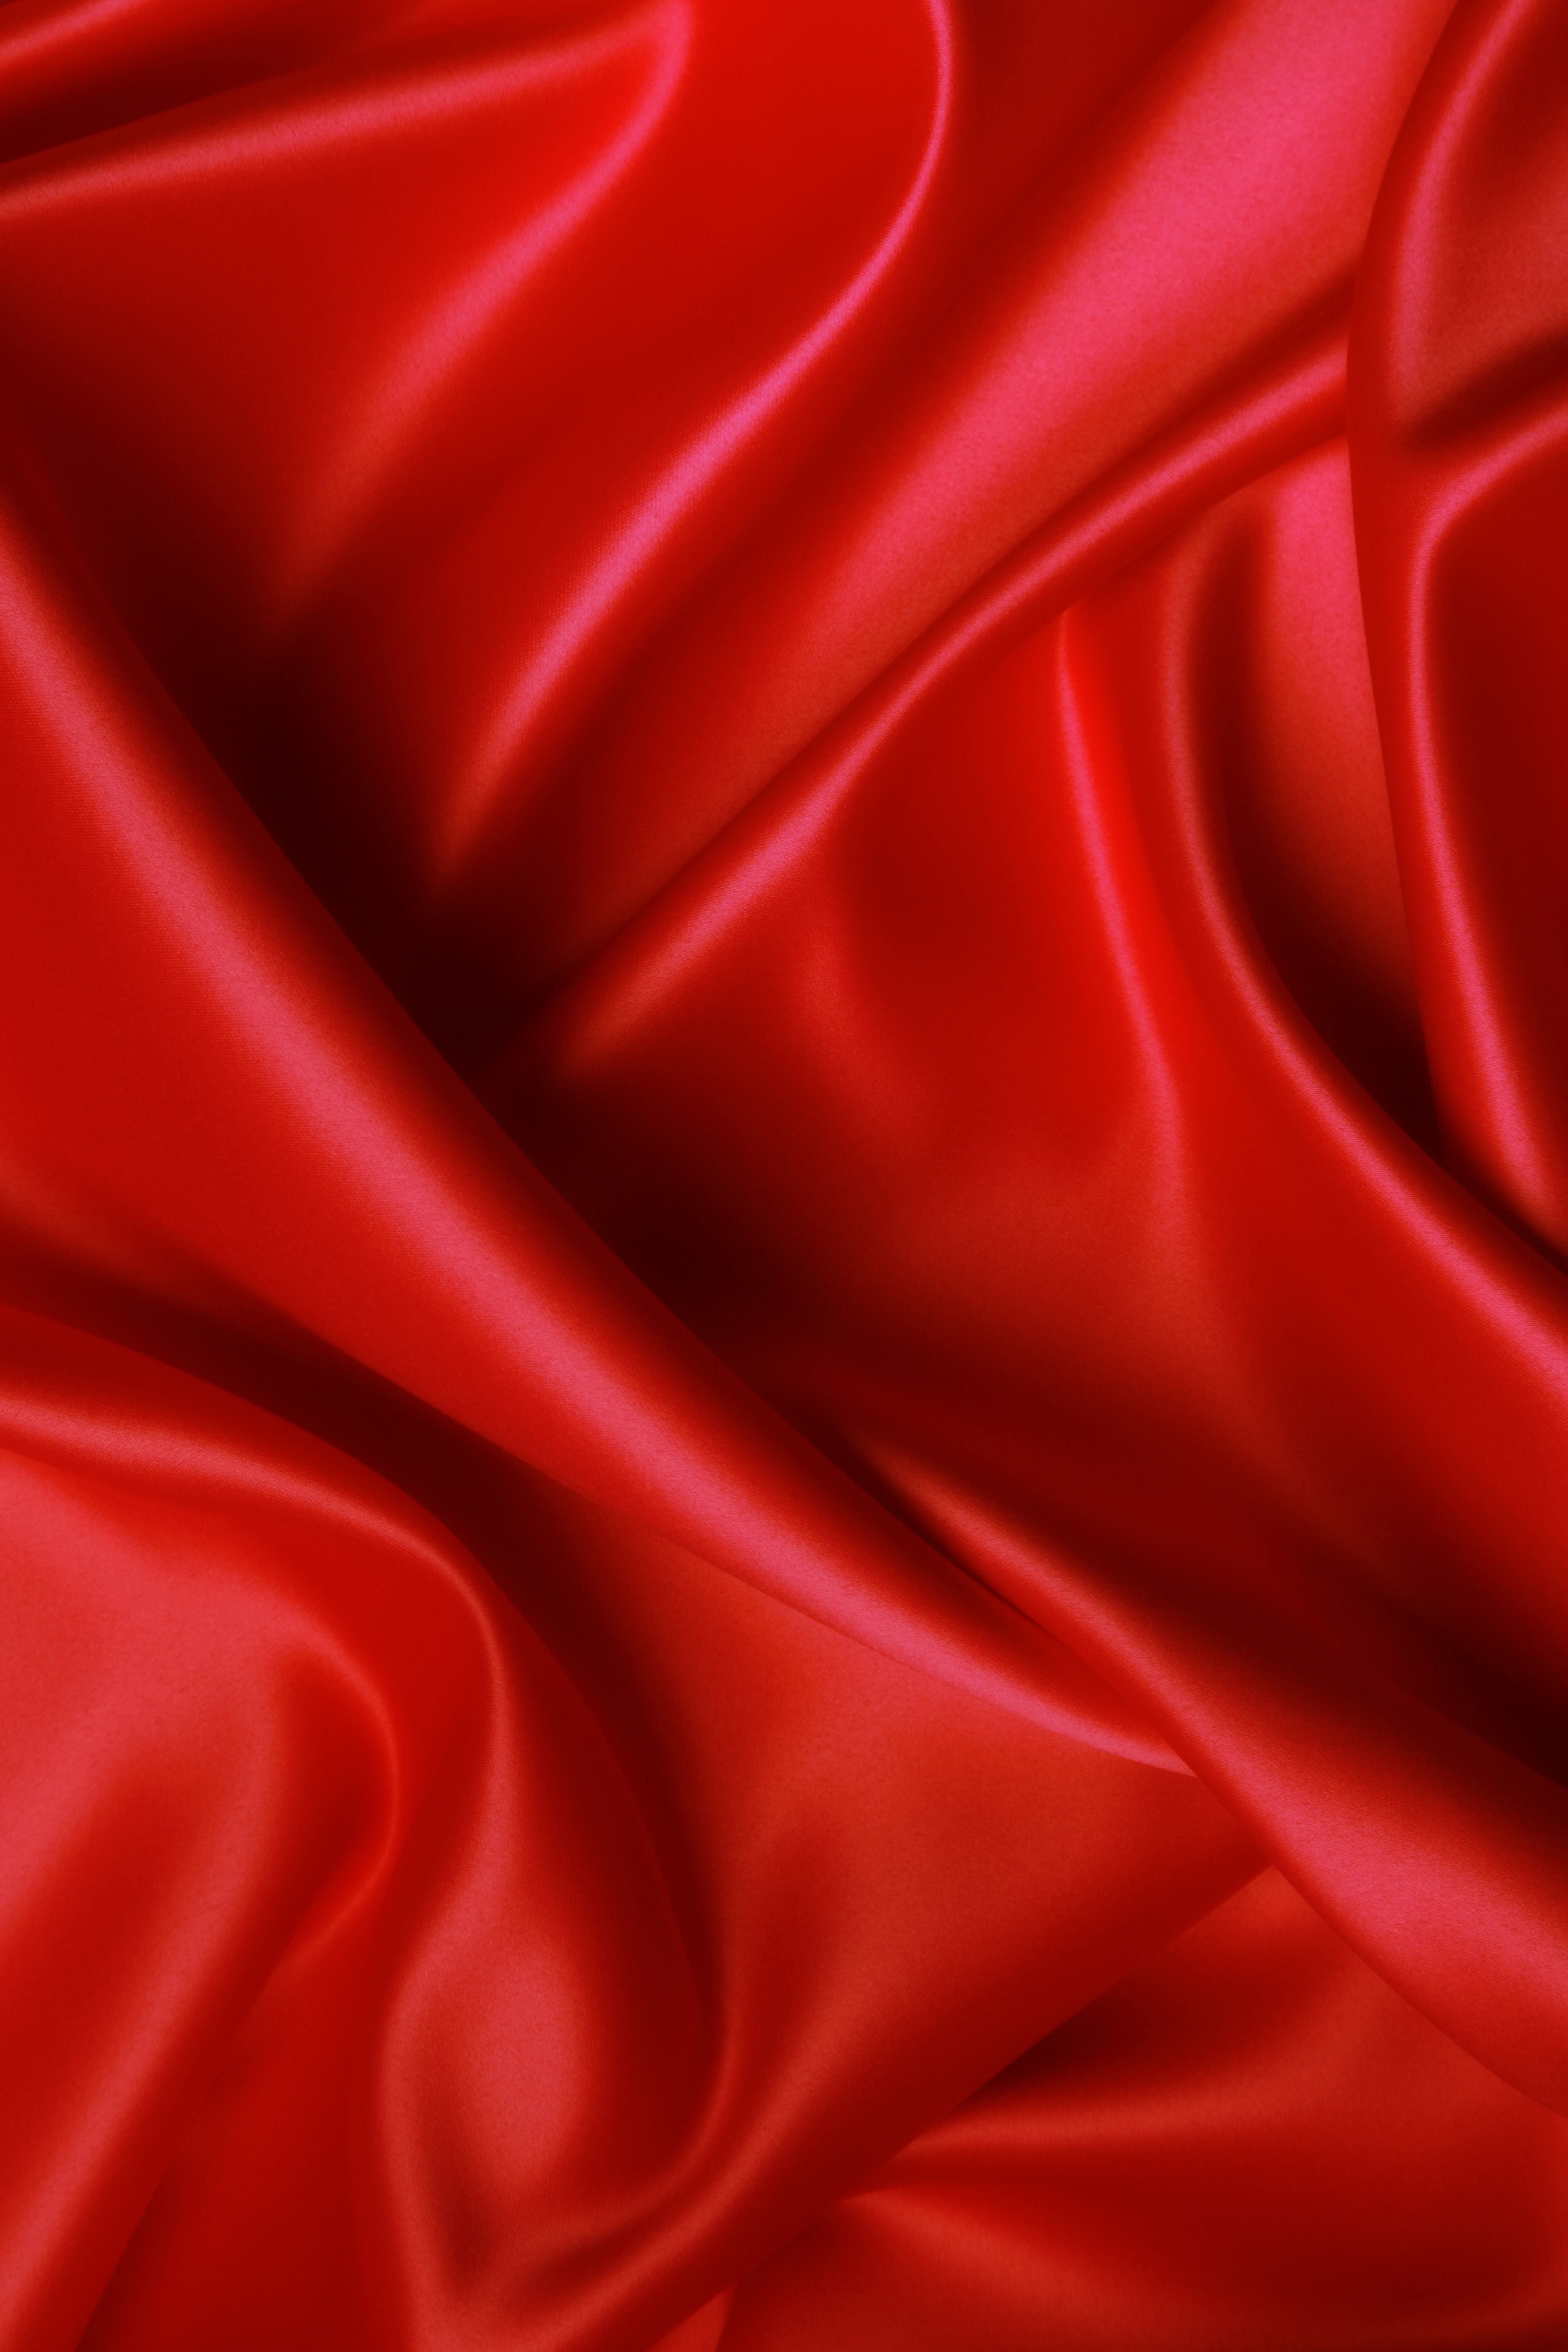 Silk red Wallpaper Download